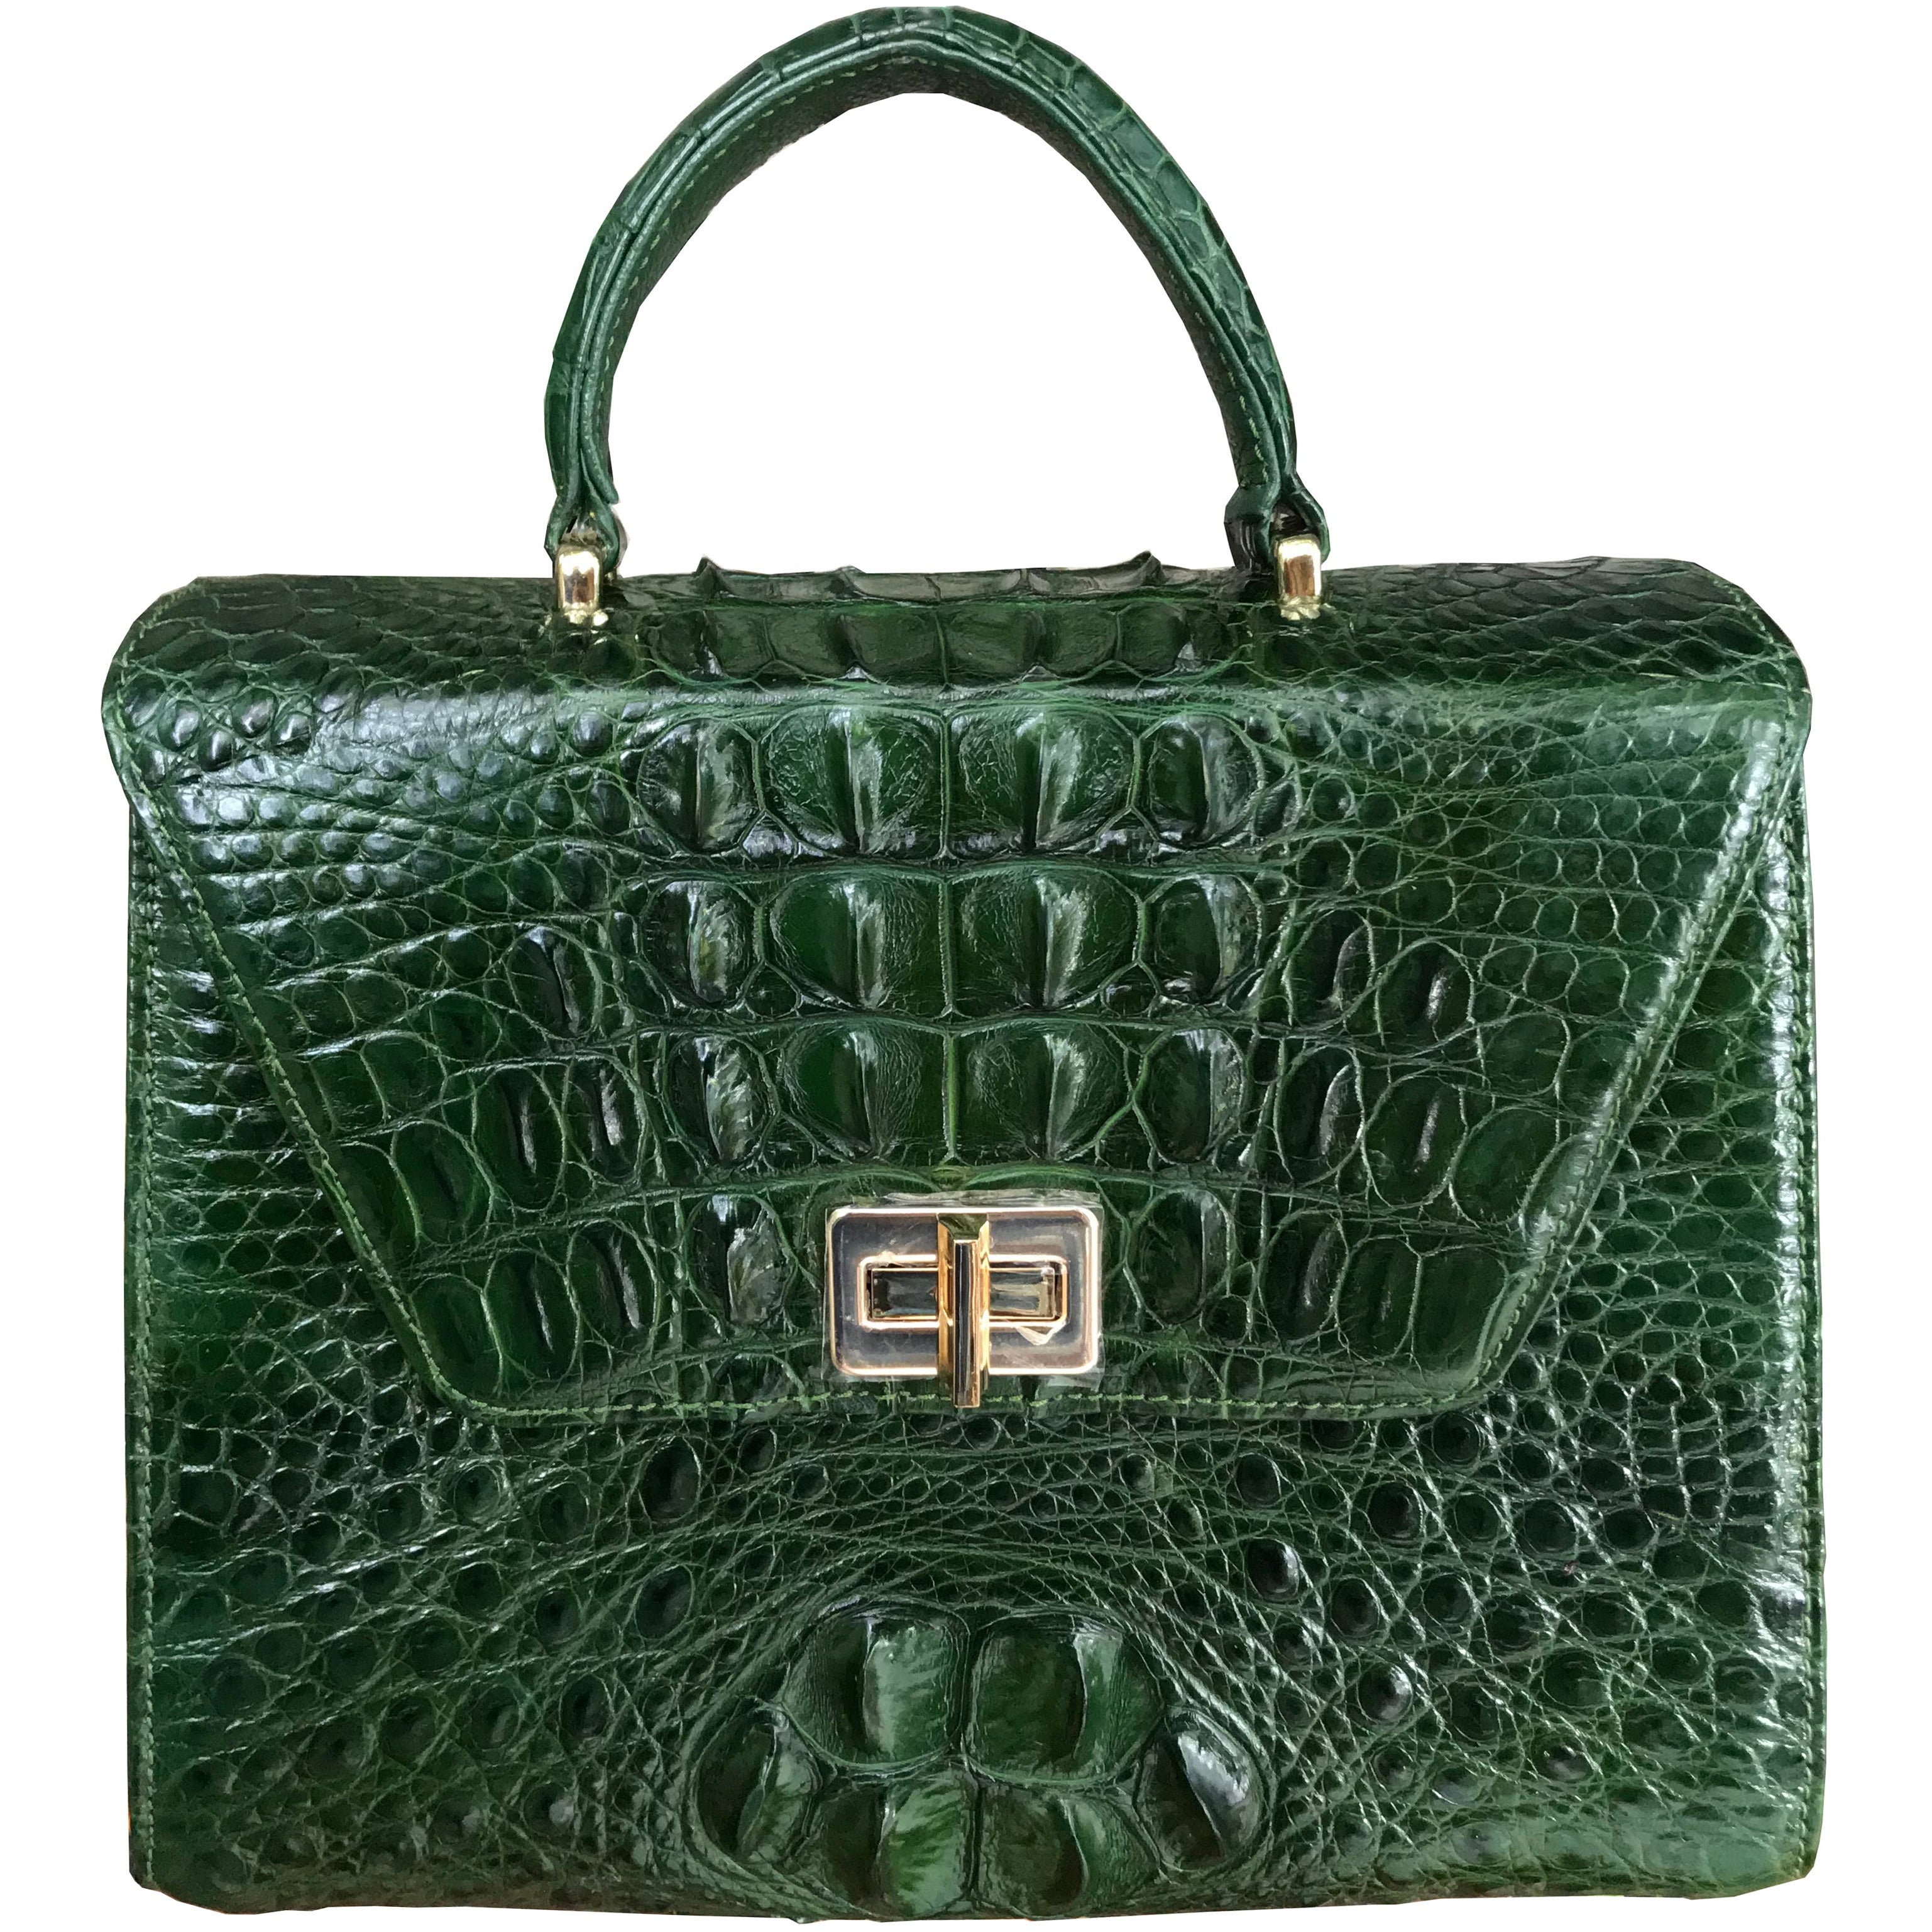 Women's Handmade Leather Handbag